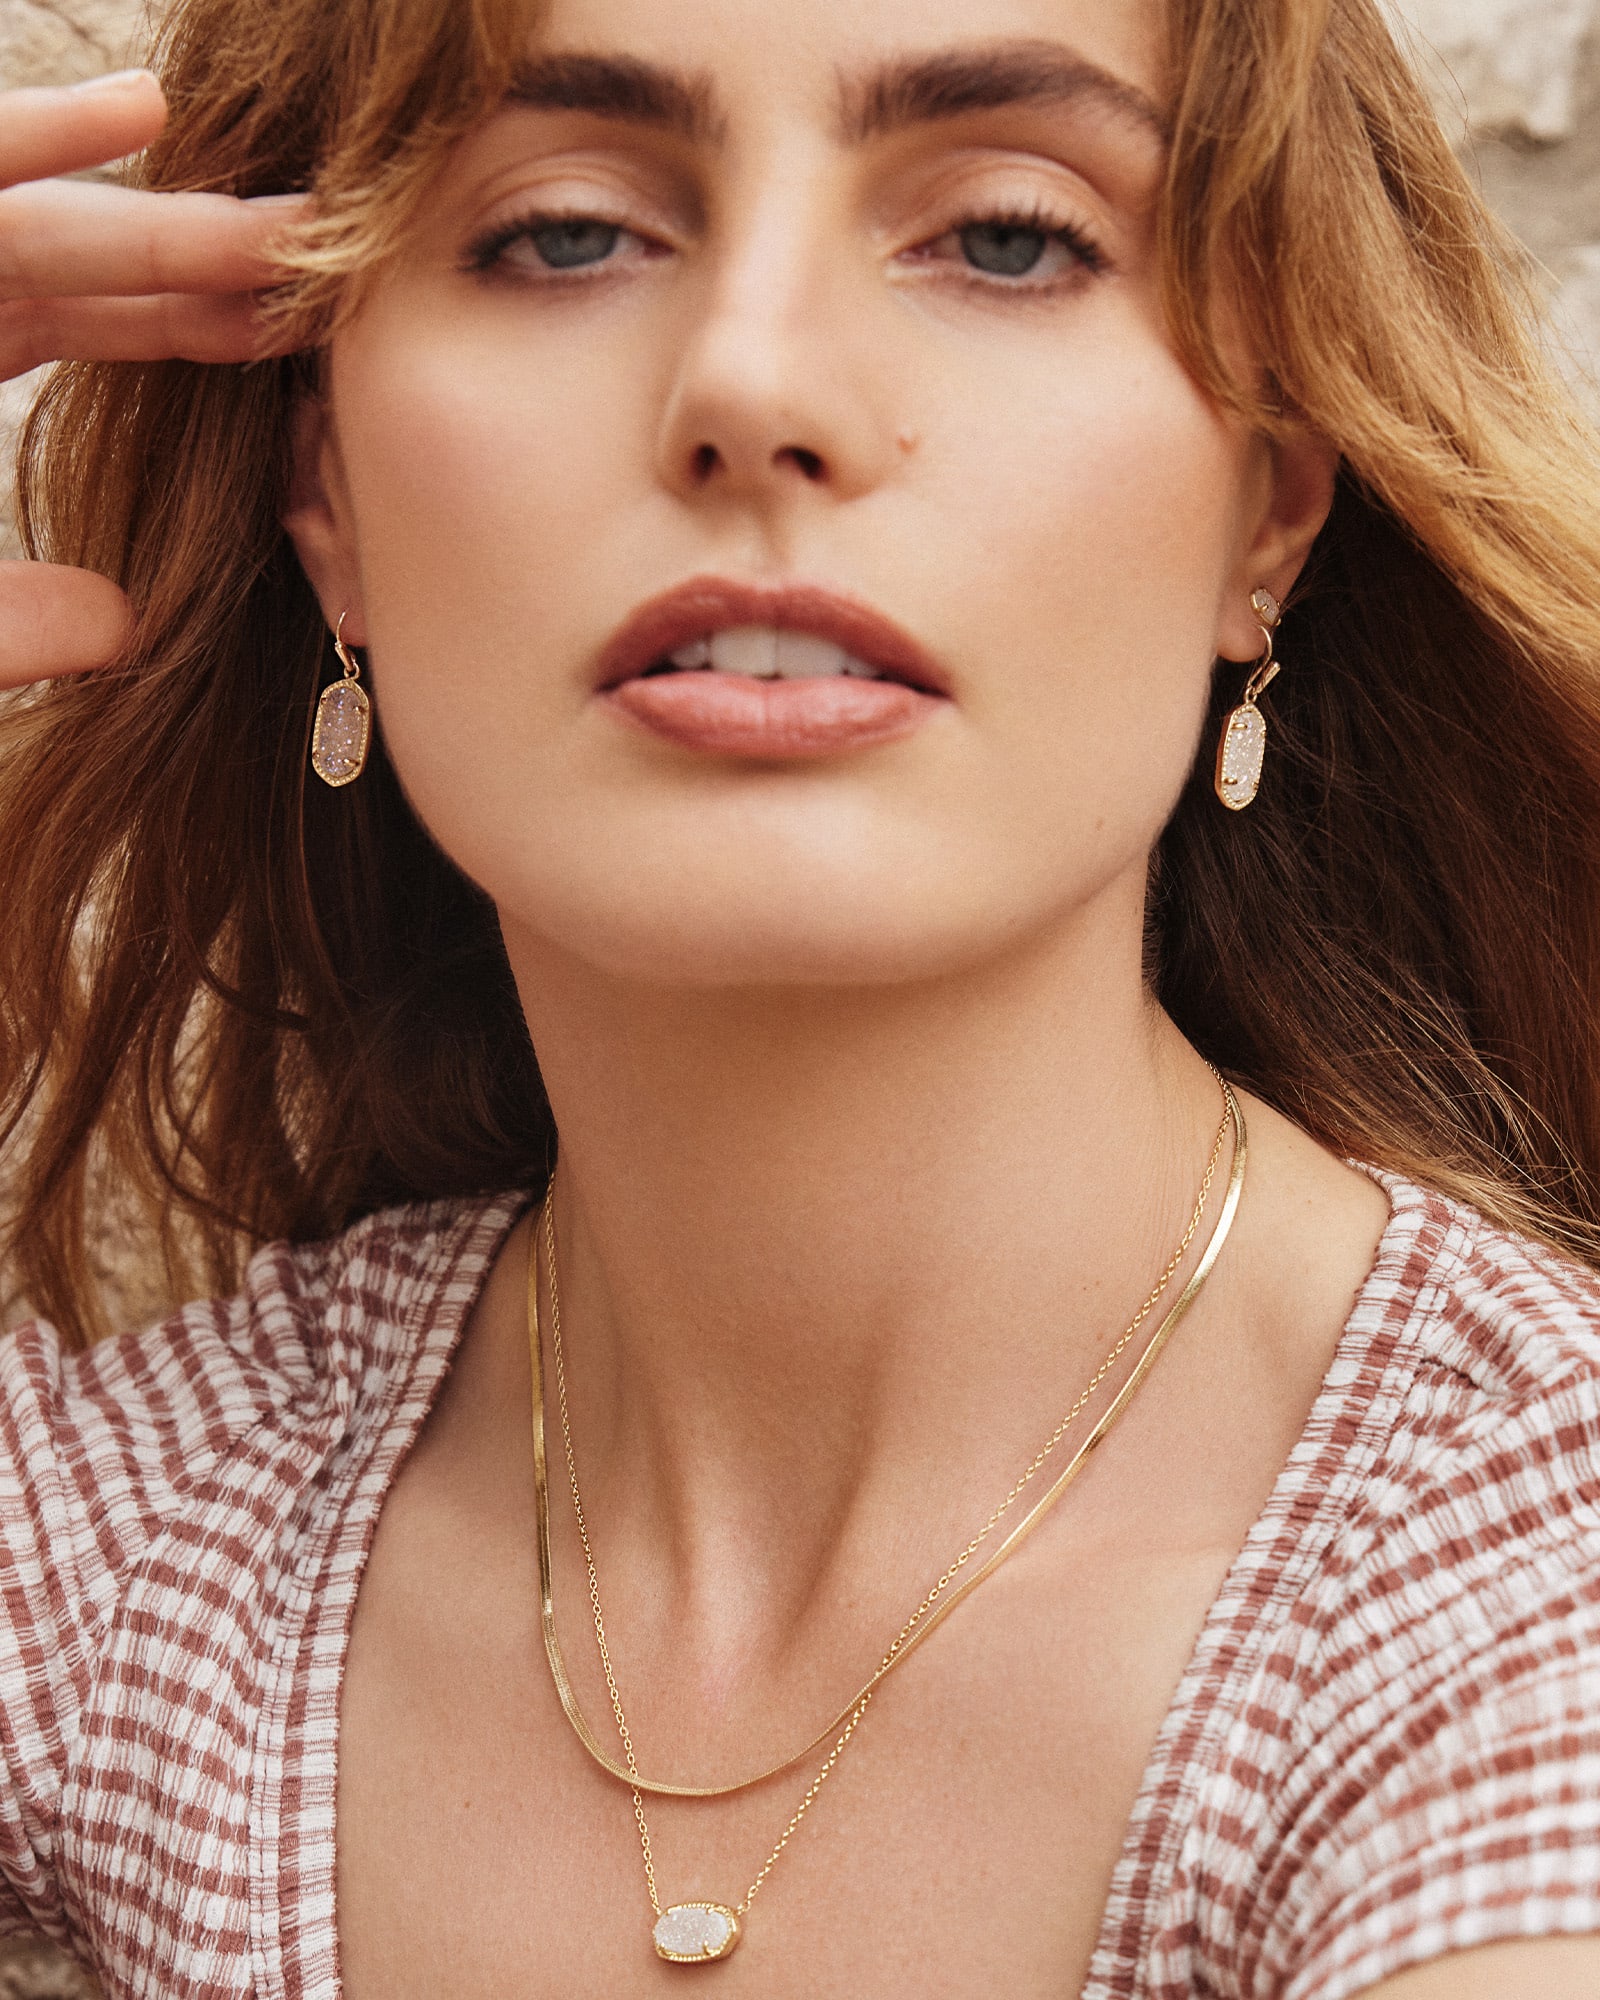 Elisa Herringbone Gold Multi Strand Necklace in Iridescent Drusy